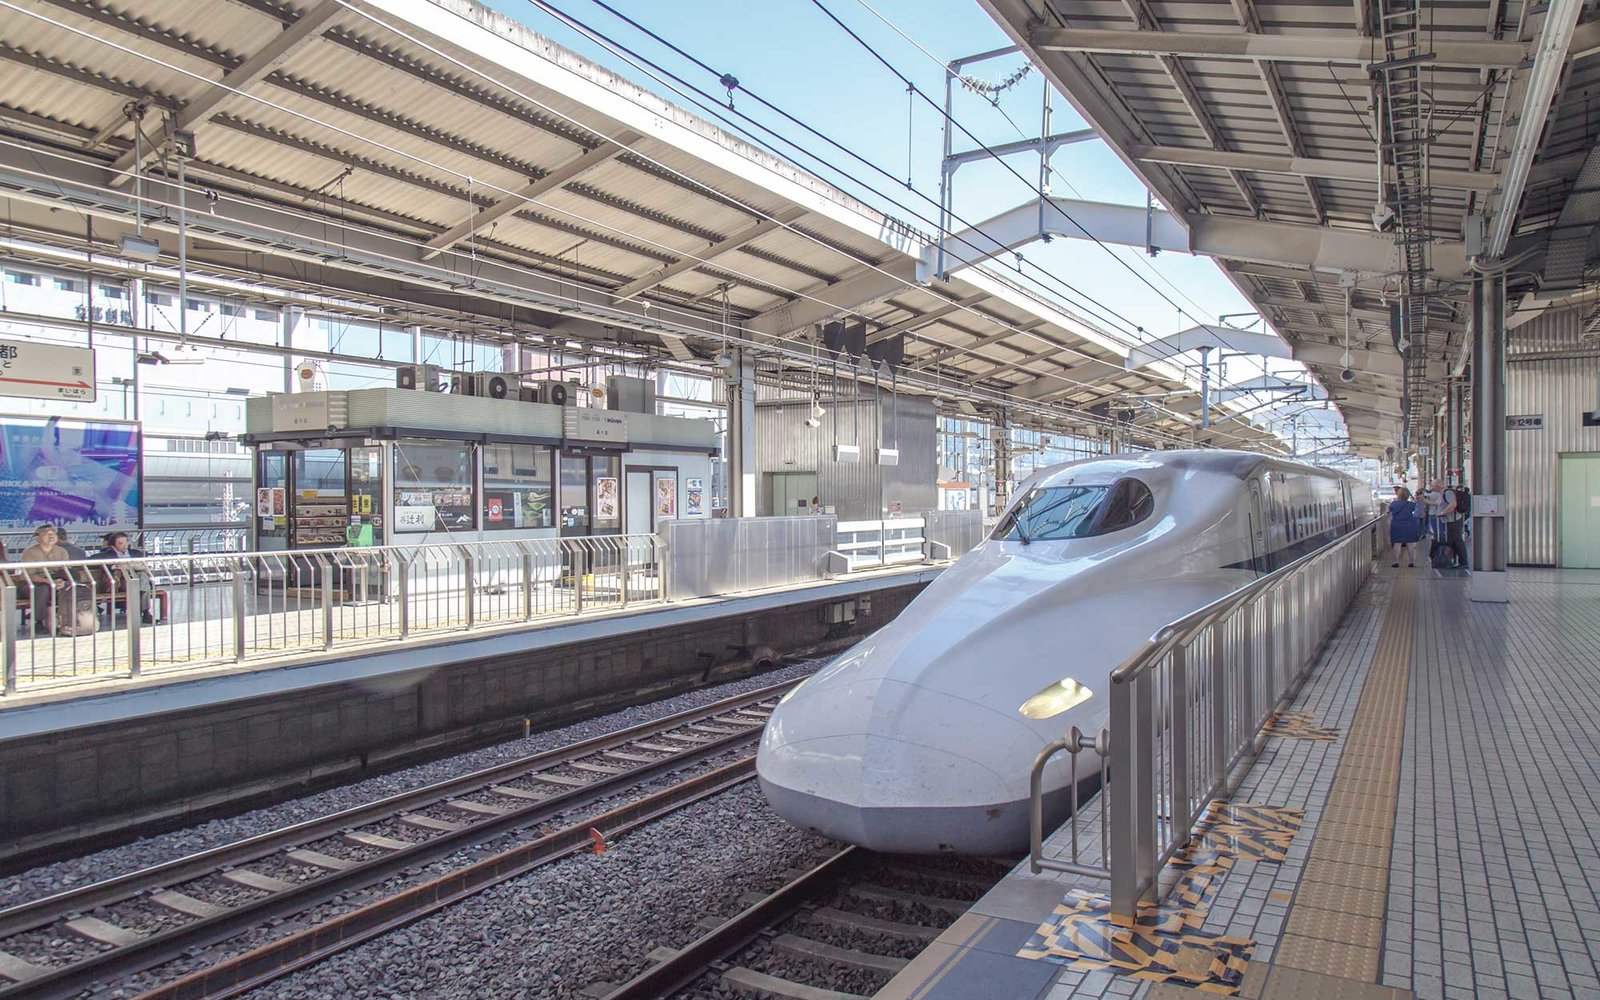 Catching the Shinkansen bullet train, Kyoto, Japan, October 2015.